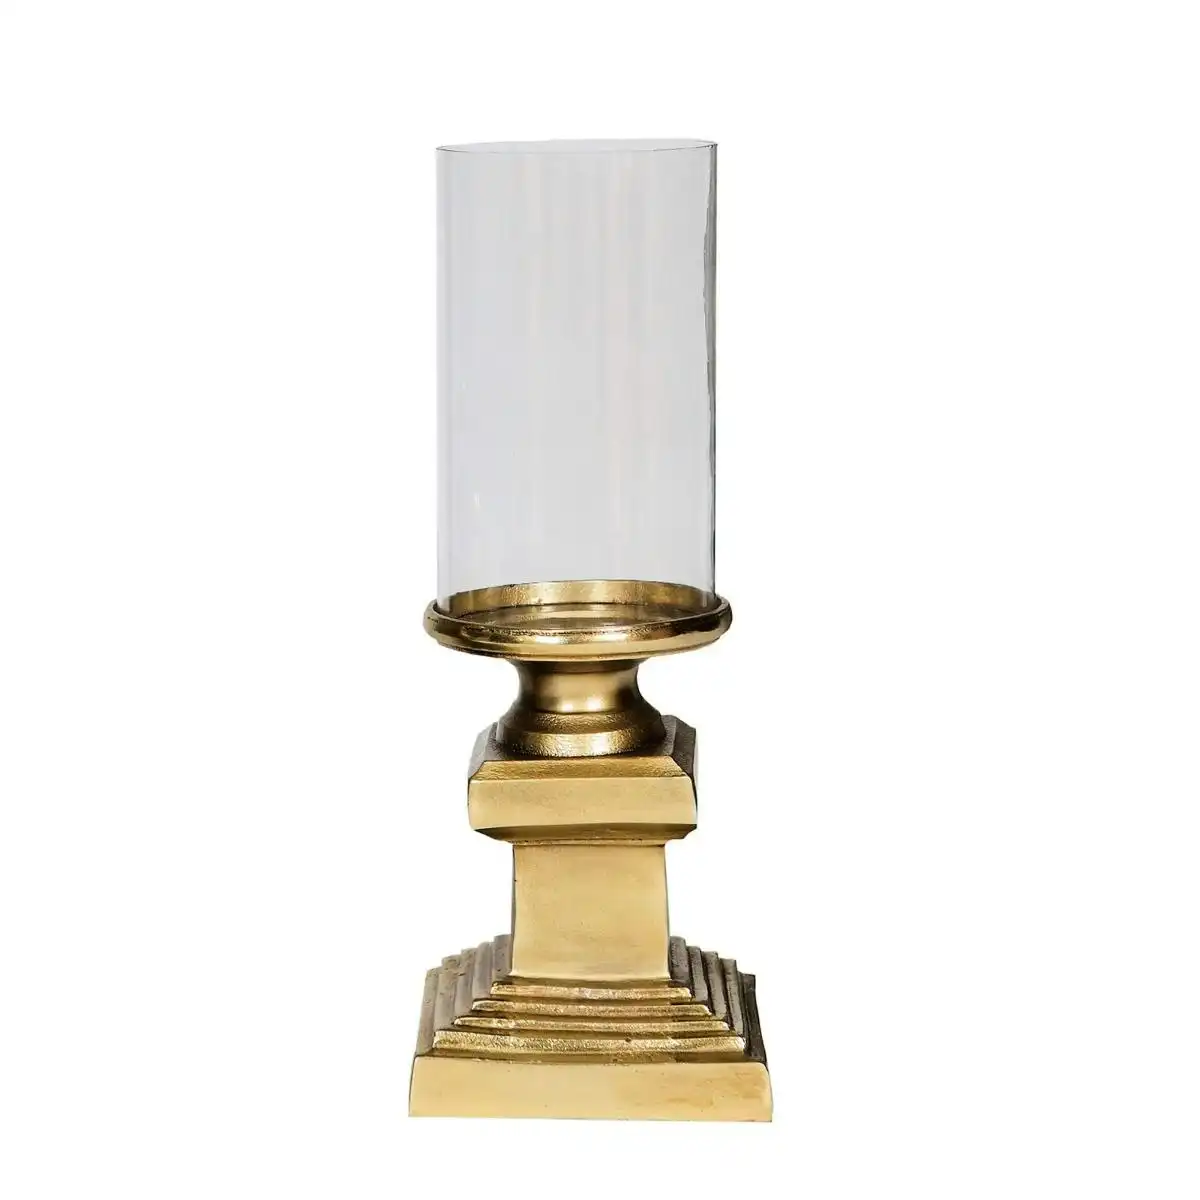 SSH Collection Lara 42cm Tall Hurricane Lamp - Brass